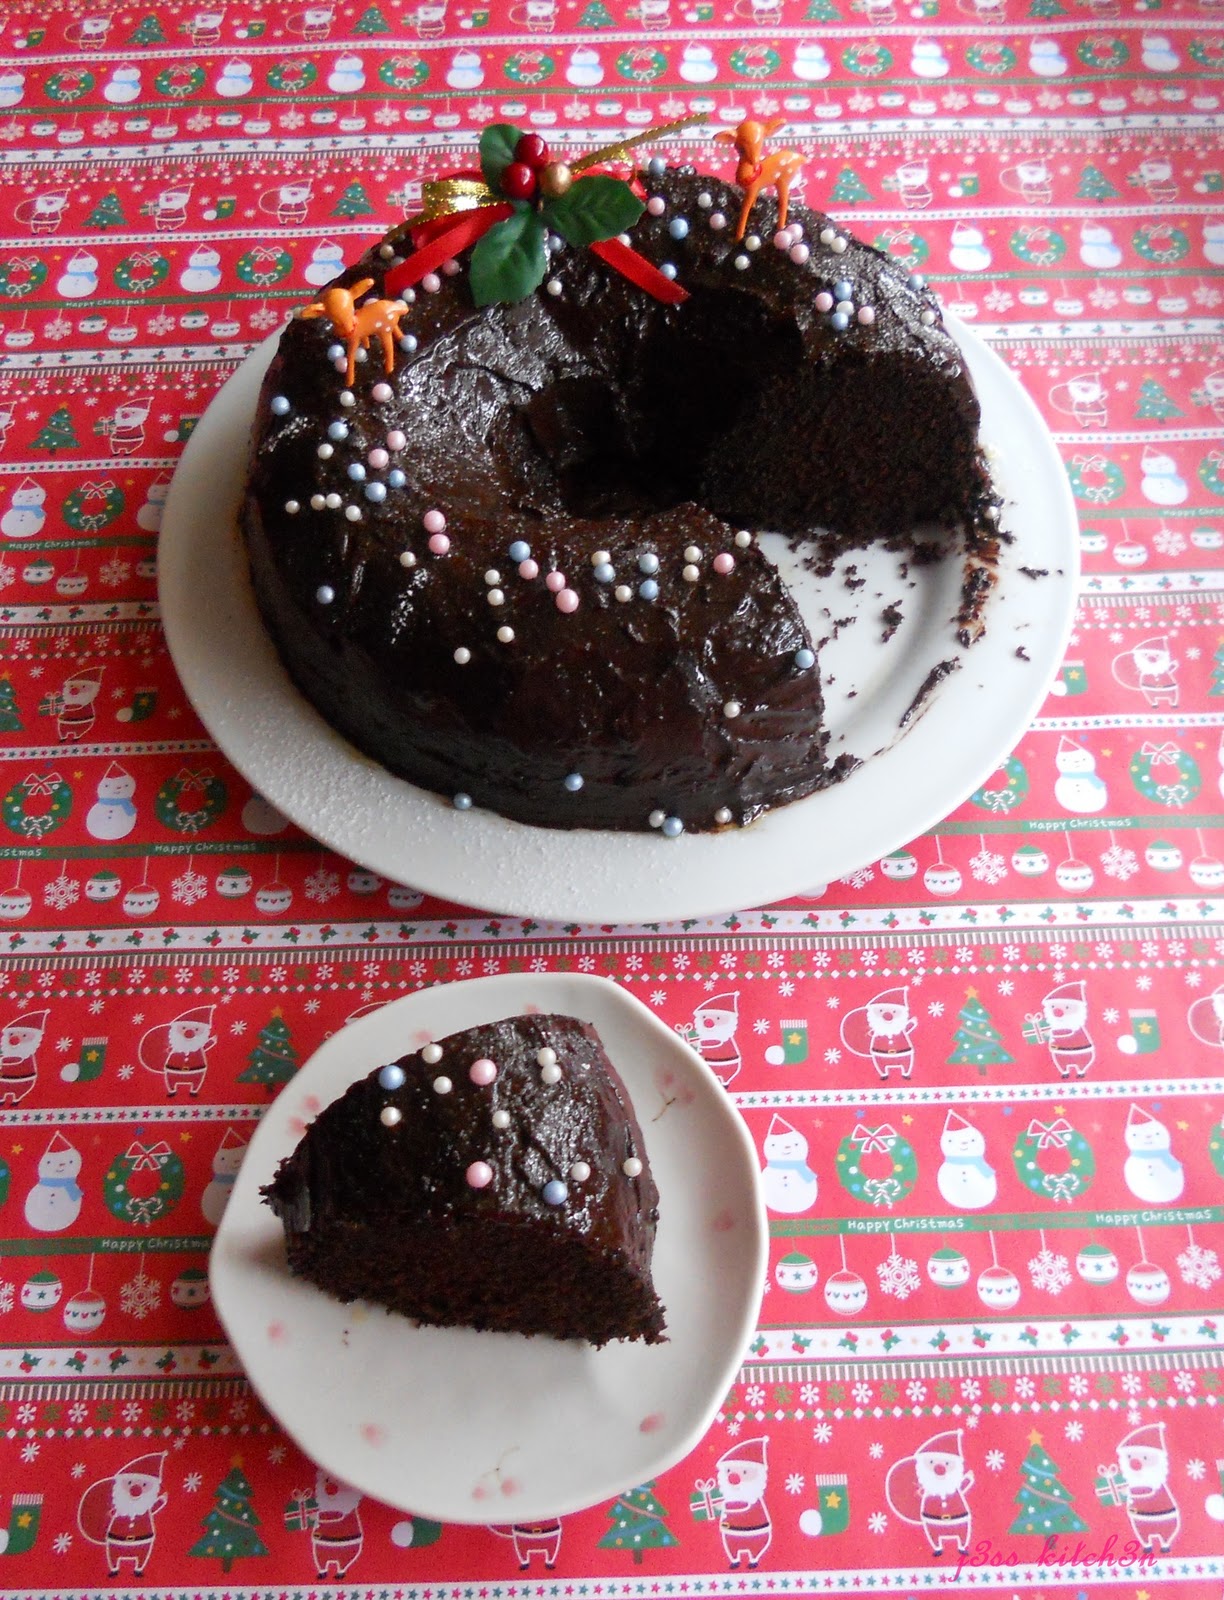 j3ss kitch3n: A Christmas Cake - Super Moist Chocolate Cake 柔软巧克力蛋糕